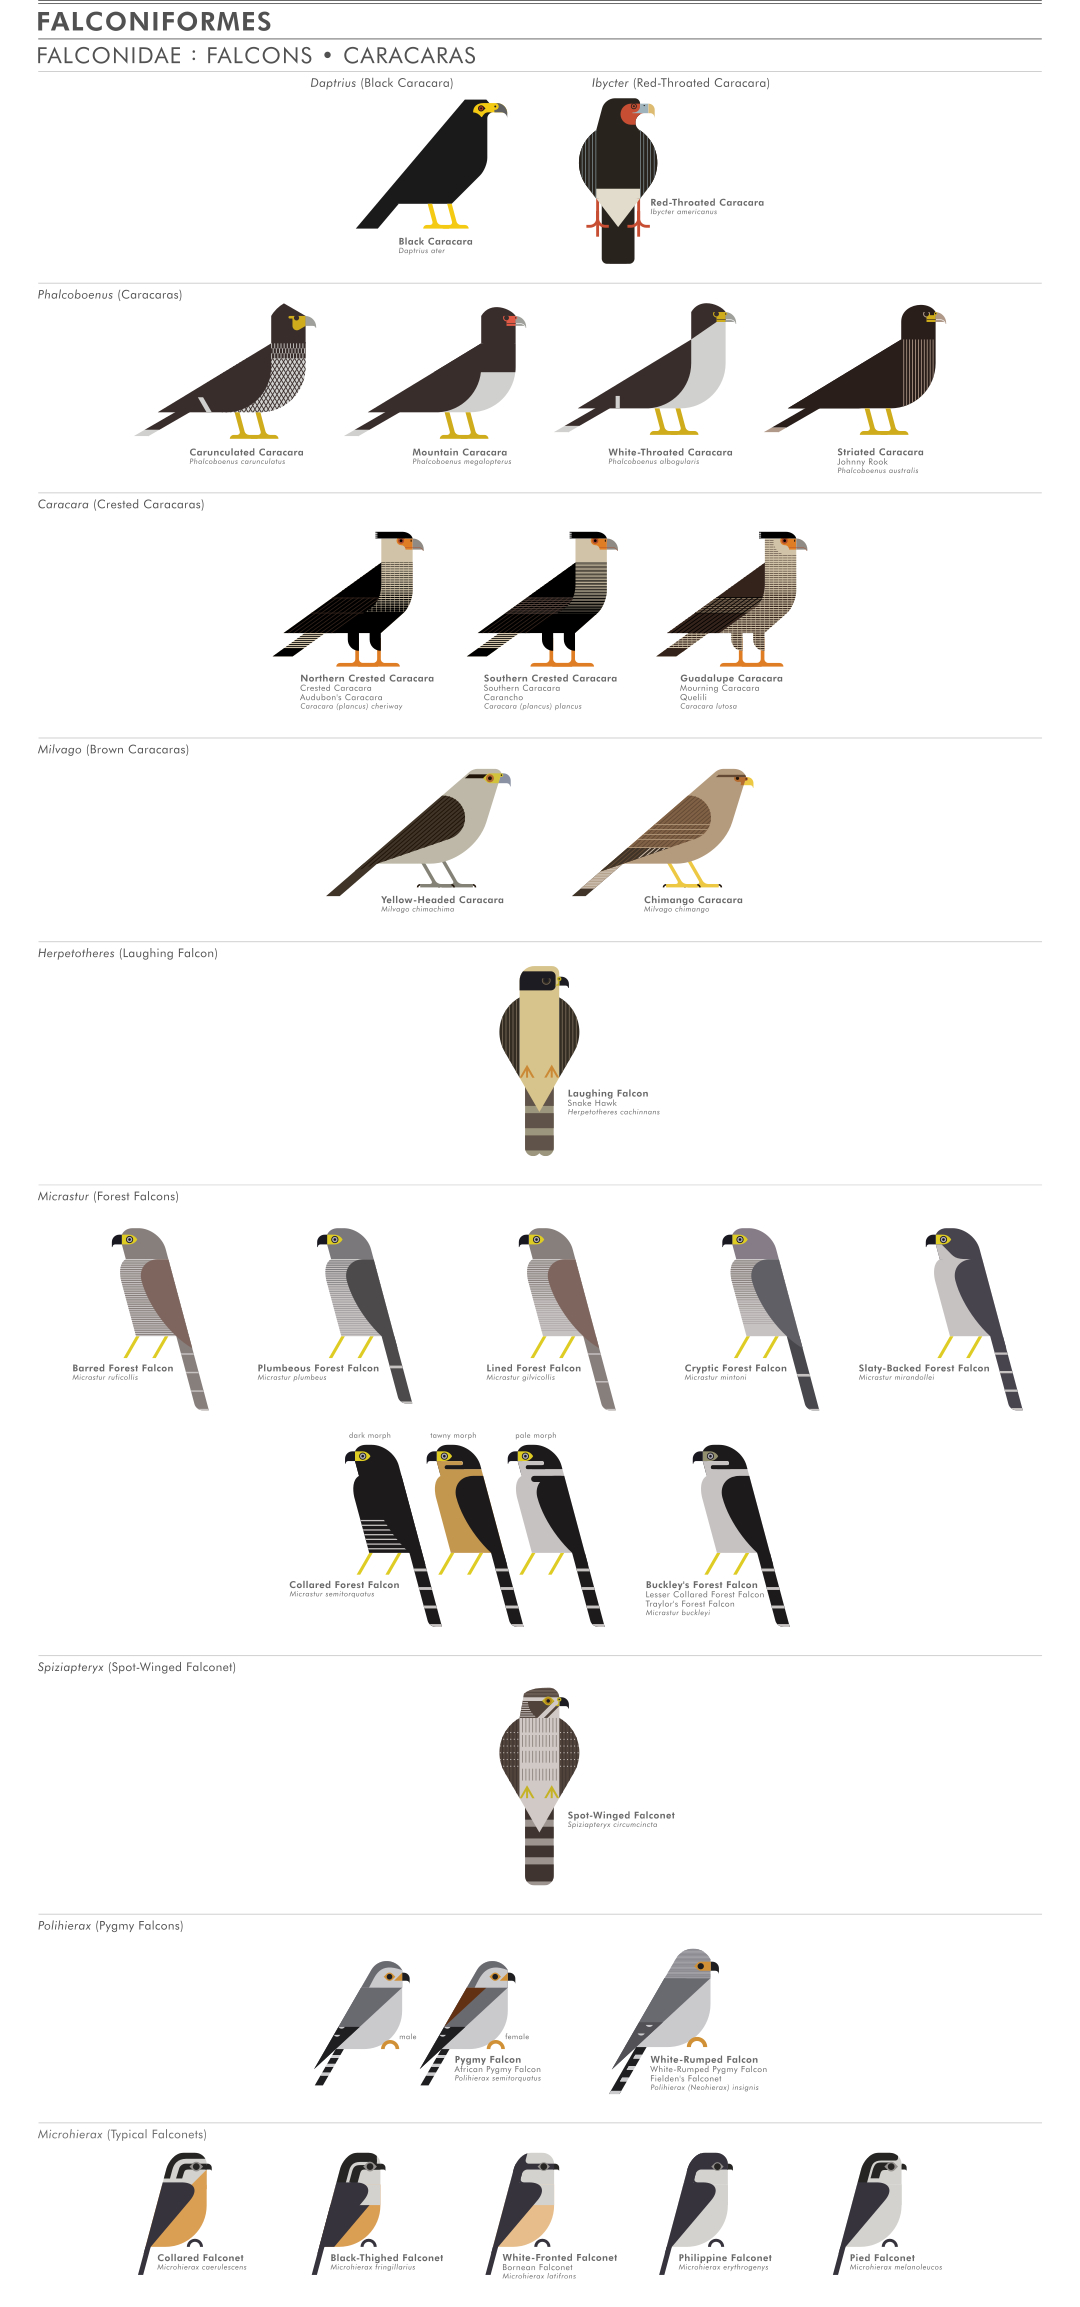 scott partridge - ave - avian vector encyclopedia - falcons - vector bird art